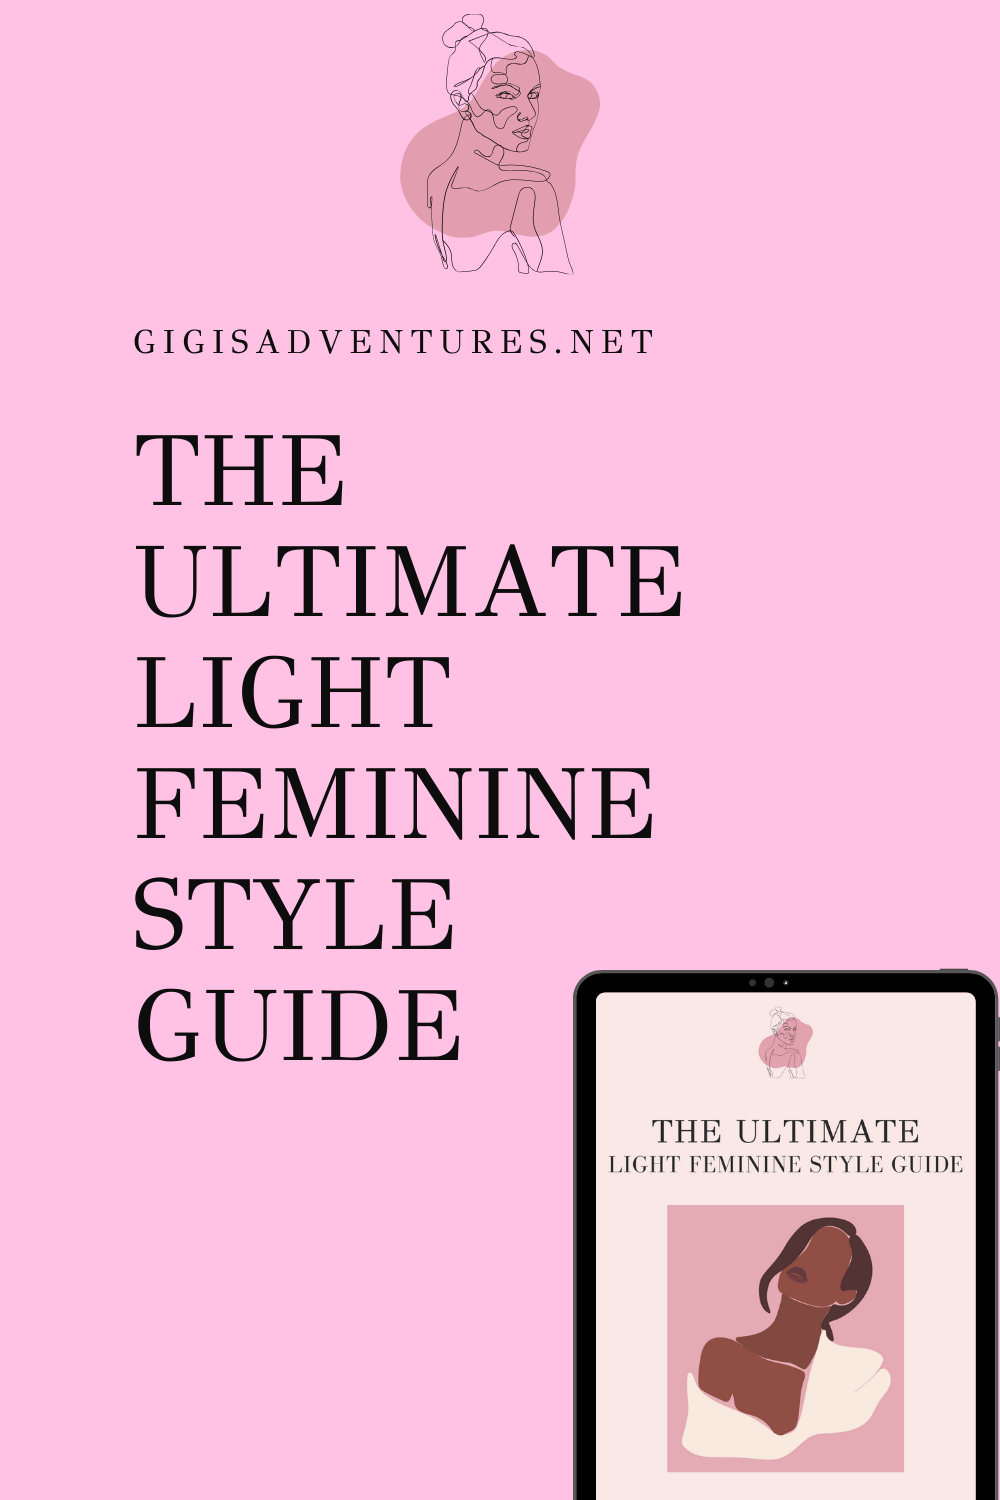 The Ultimate Light Feminine Style Guide